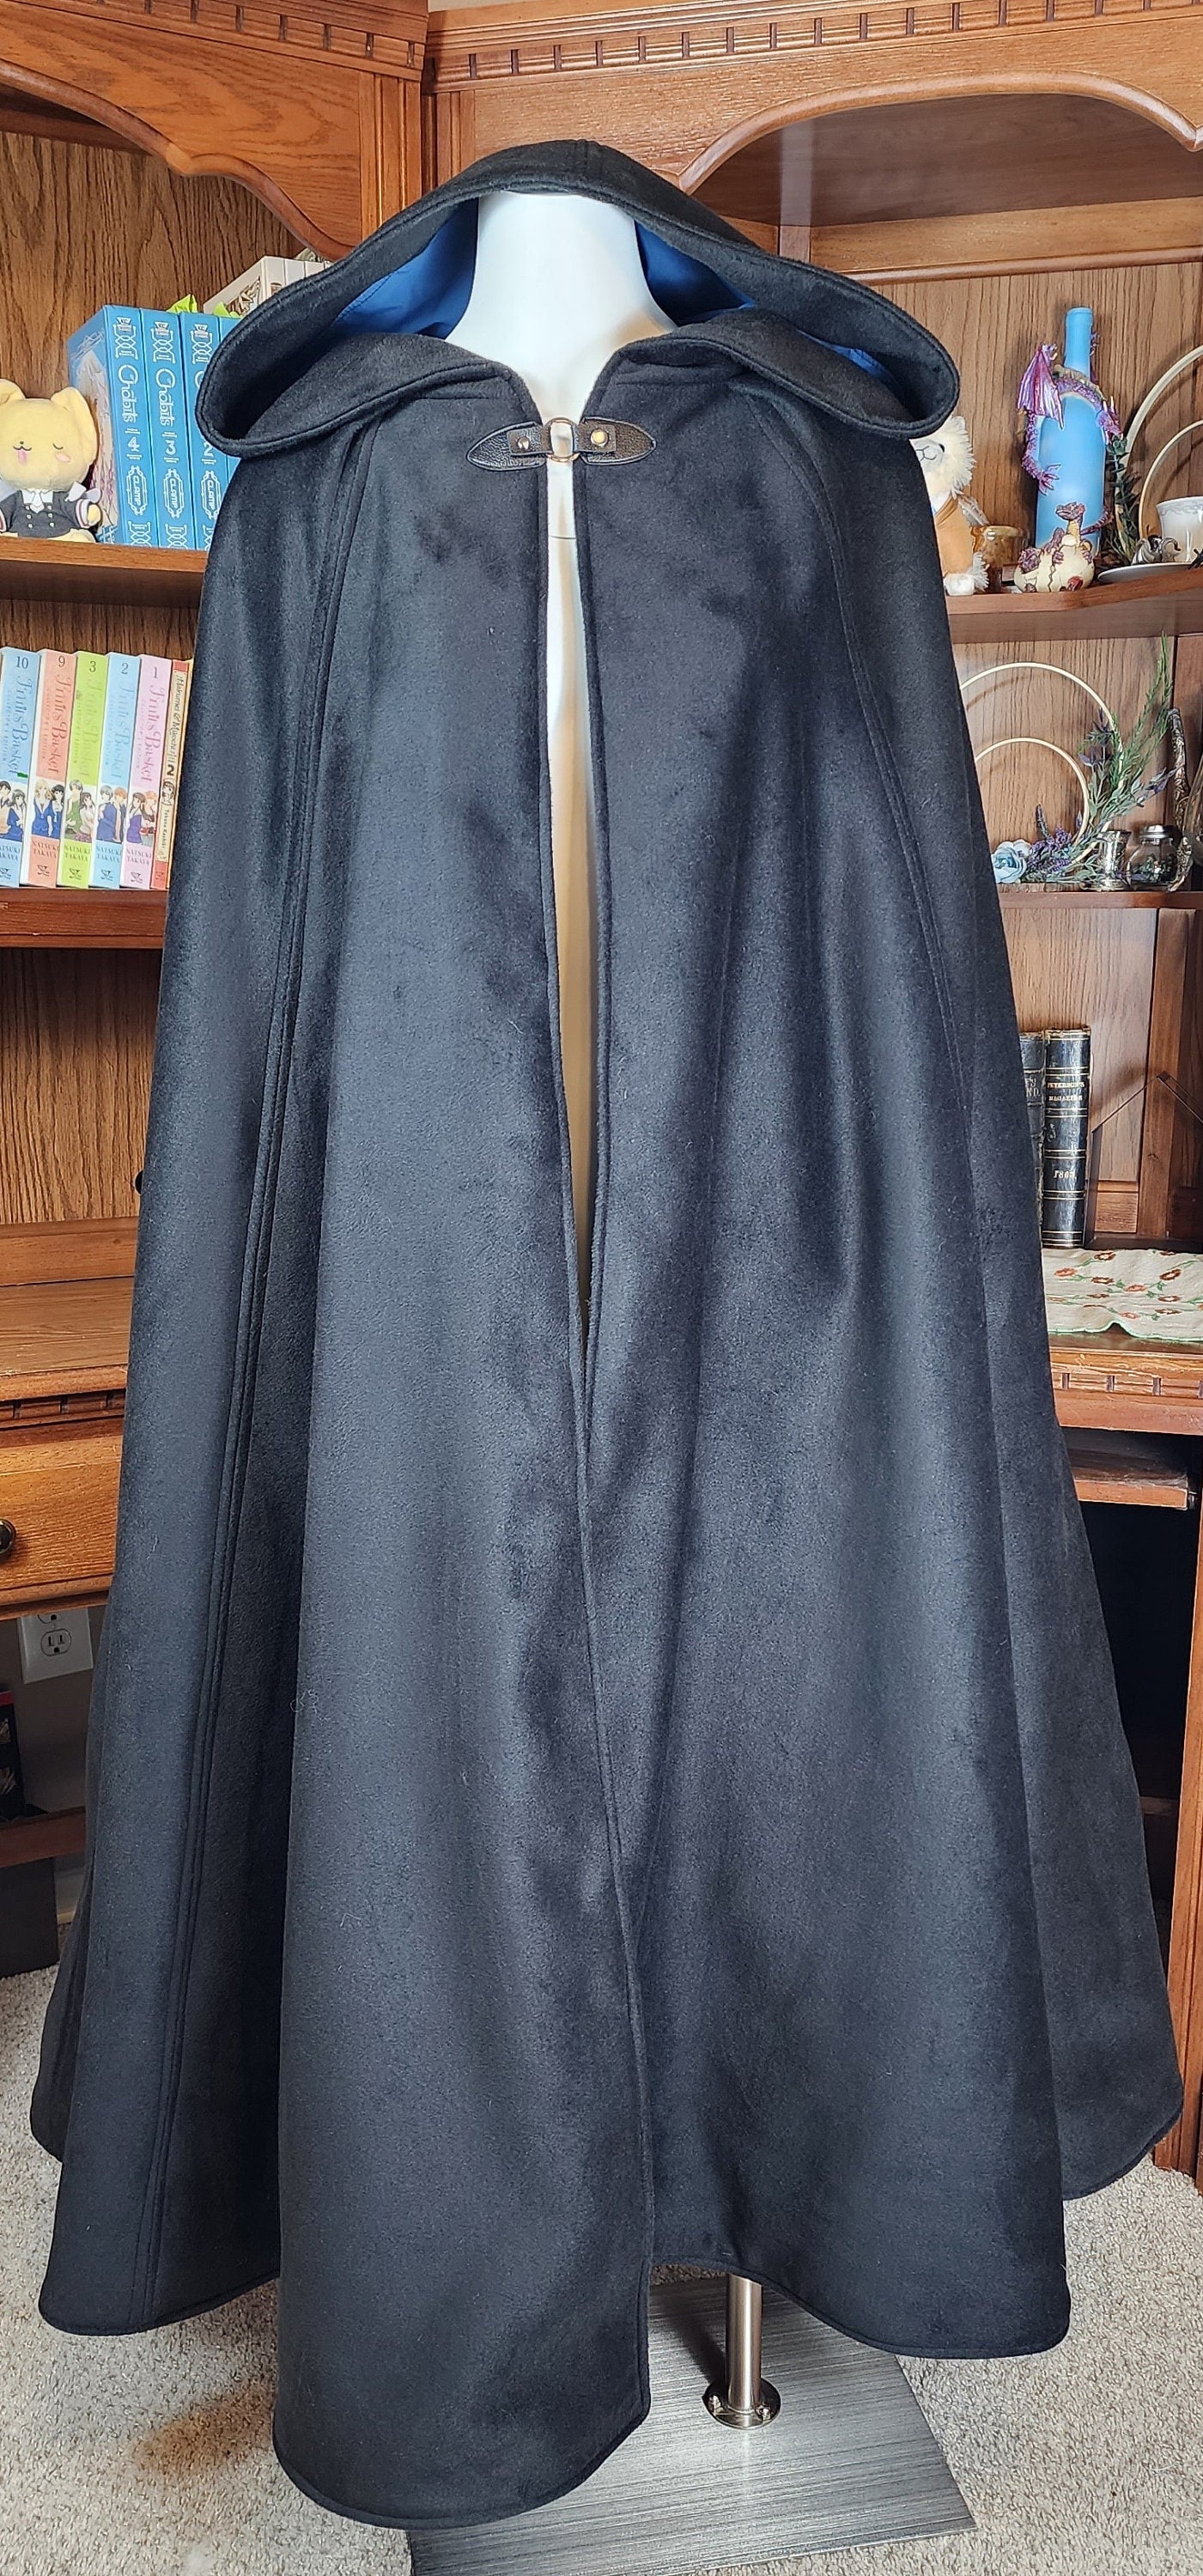 Winter Wanderer Cloak- Black cloak with blue water resistant lining